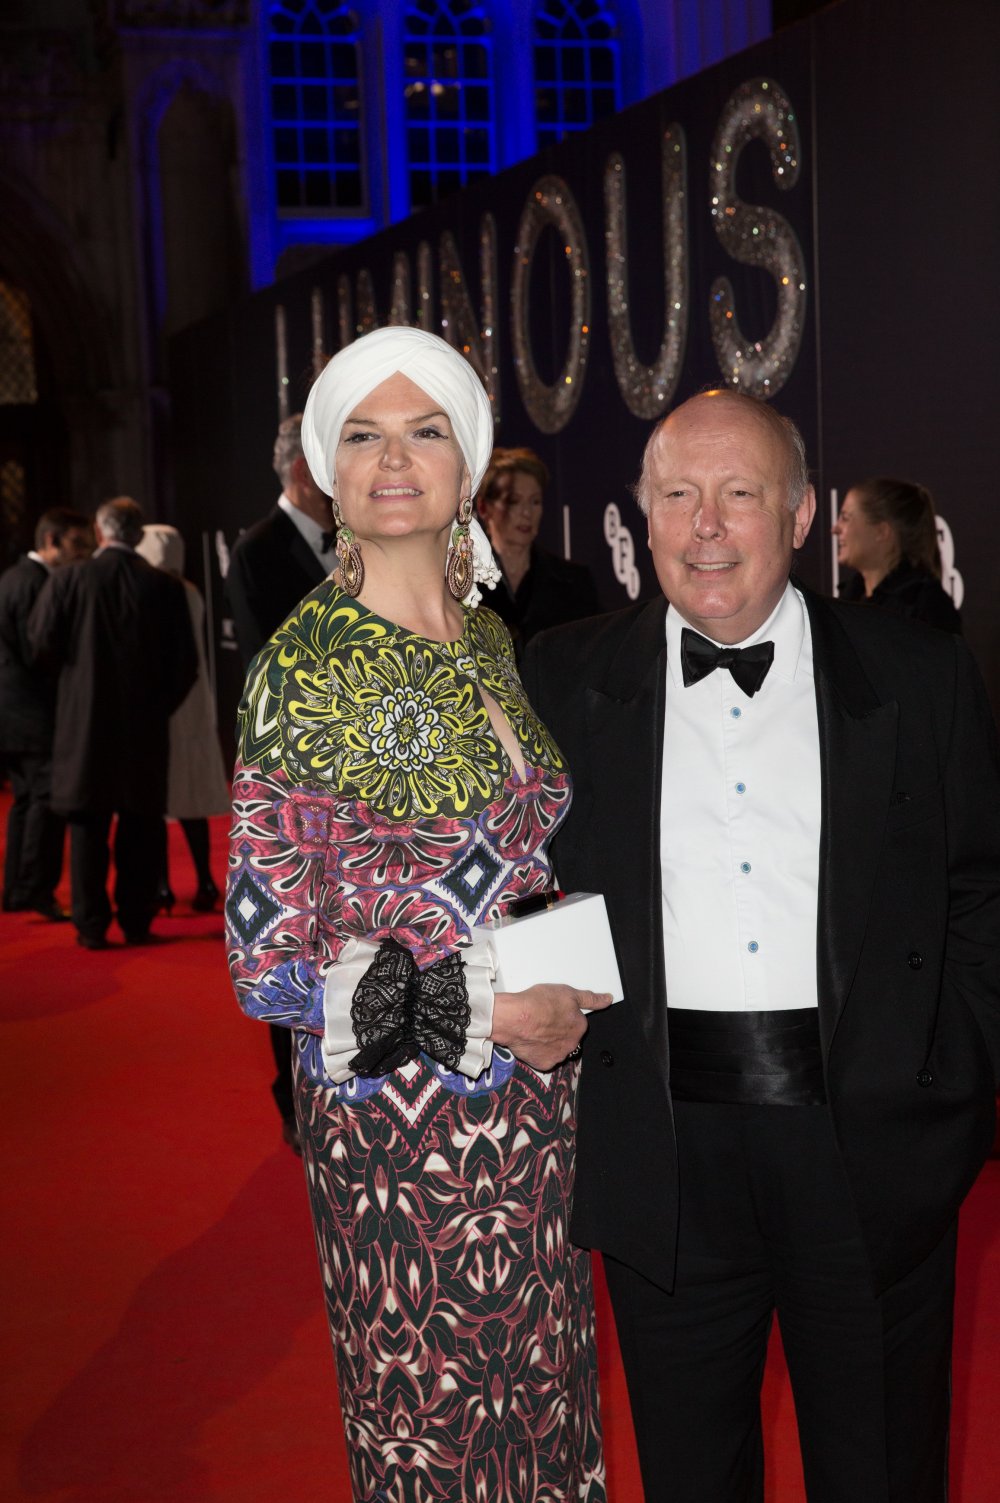 Julian Fellowes attends the BFI LUMINOUS gala 2015